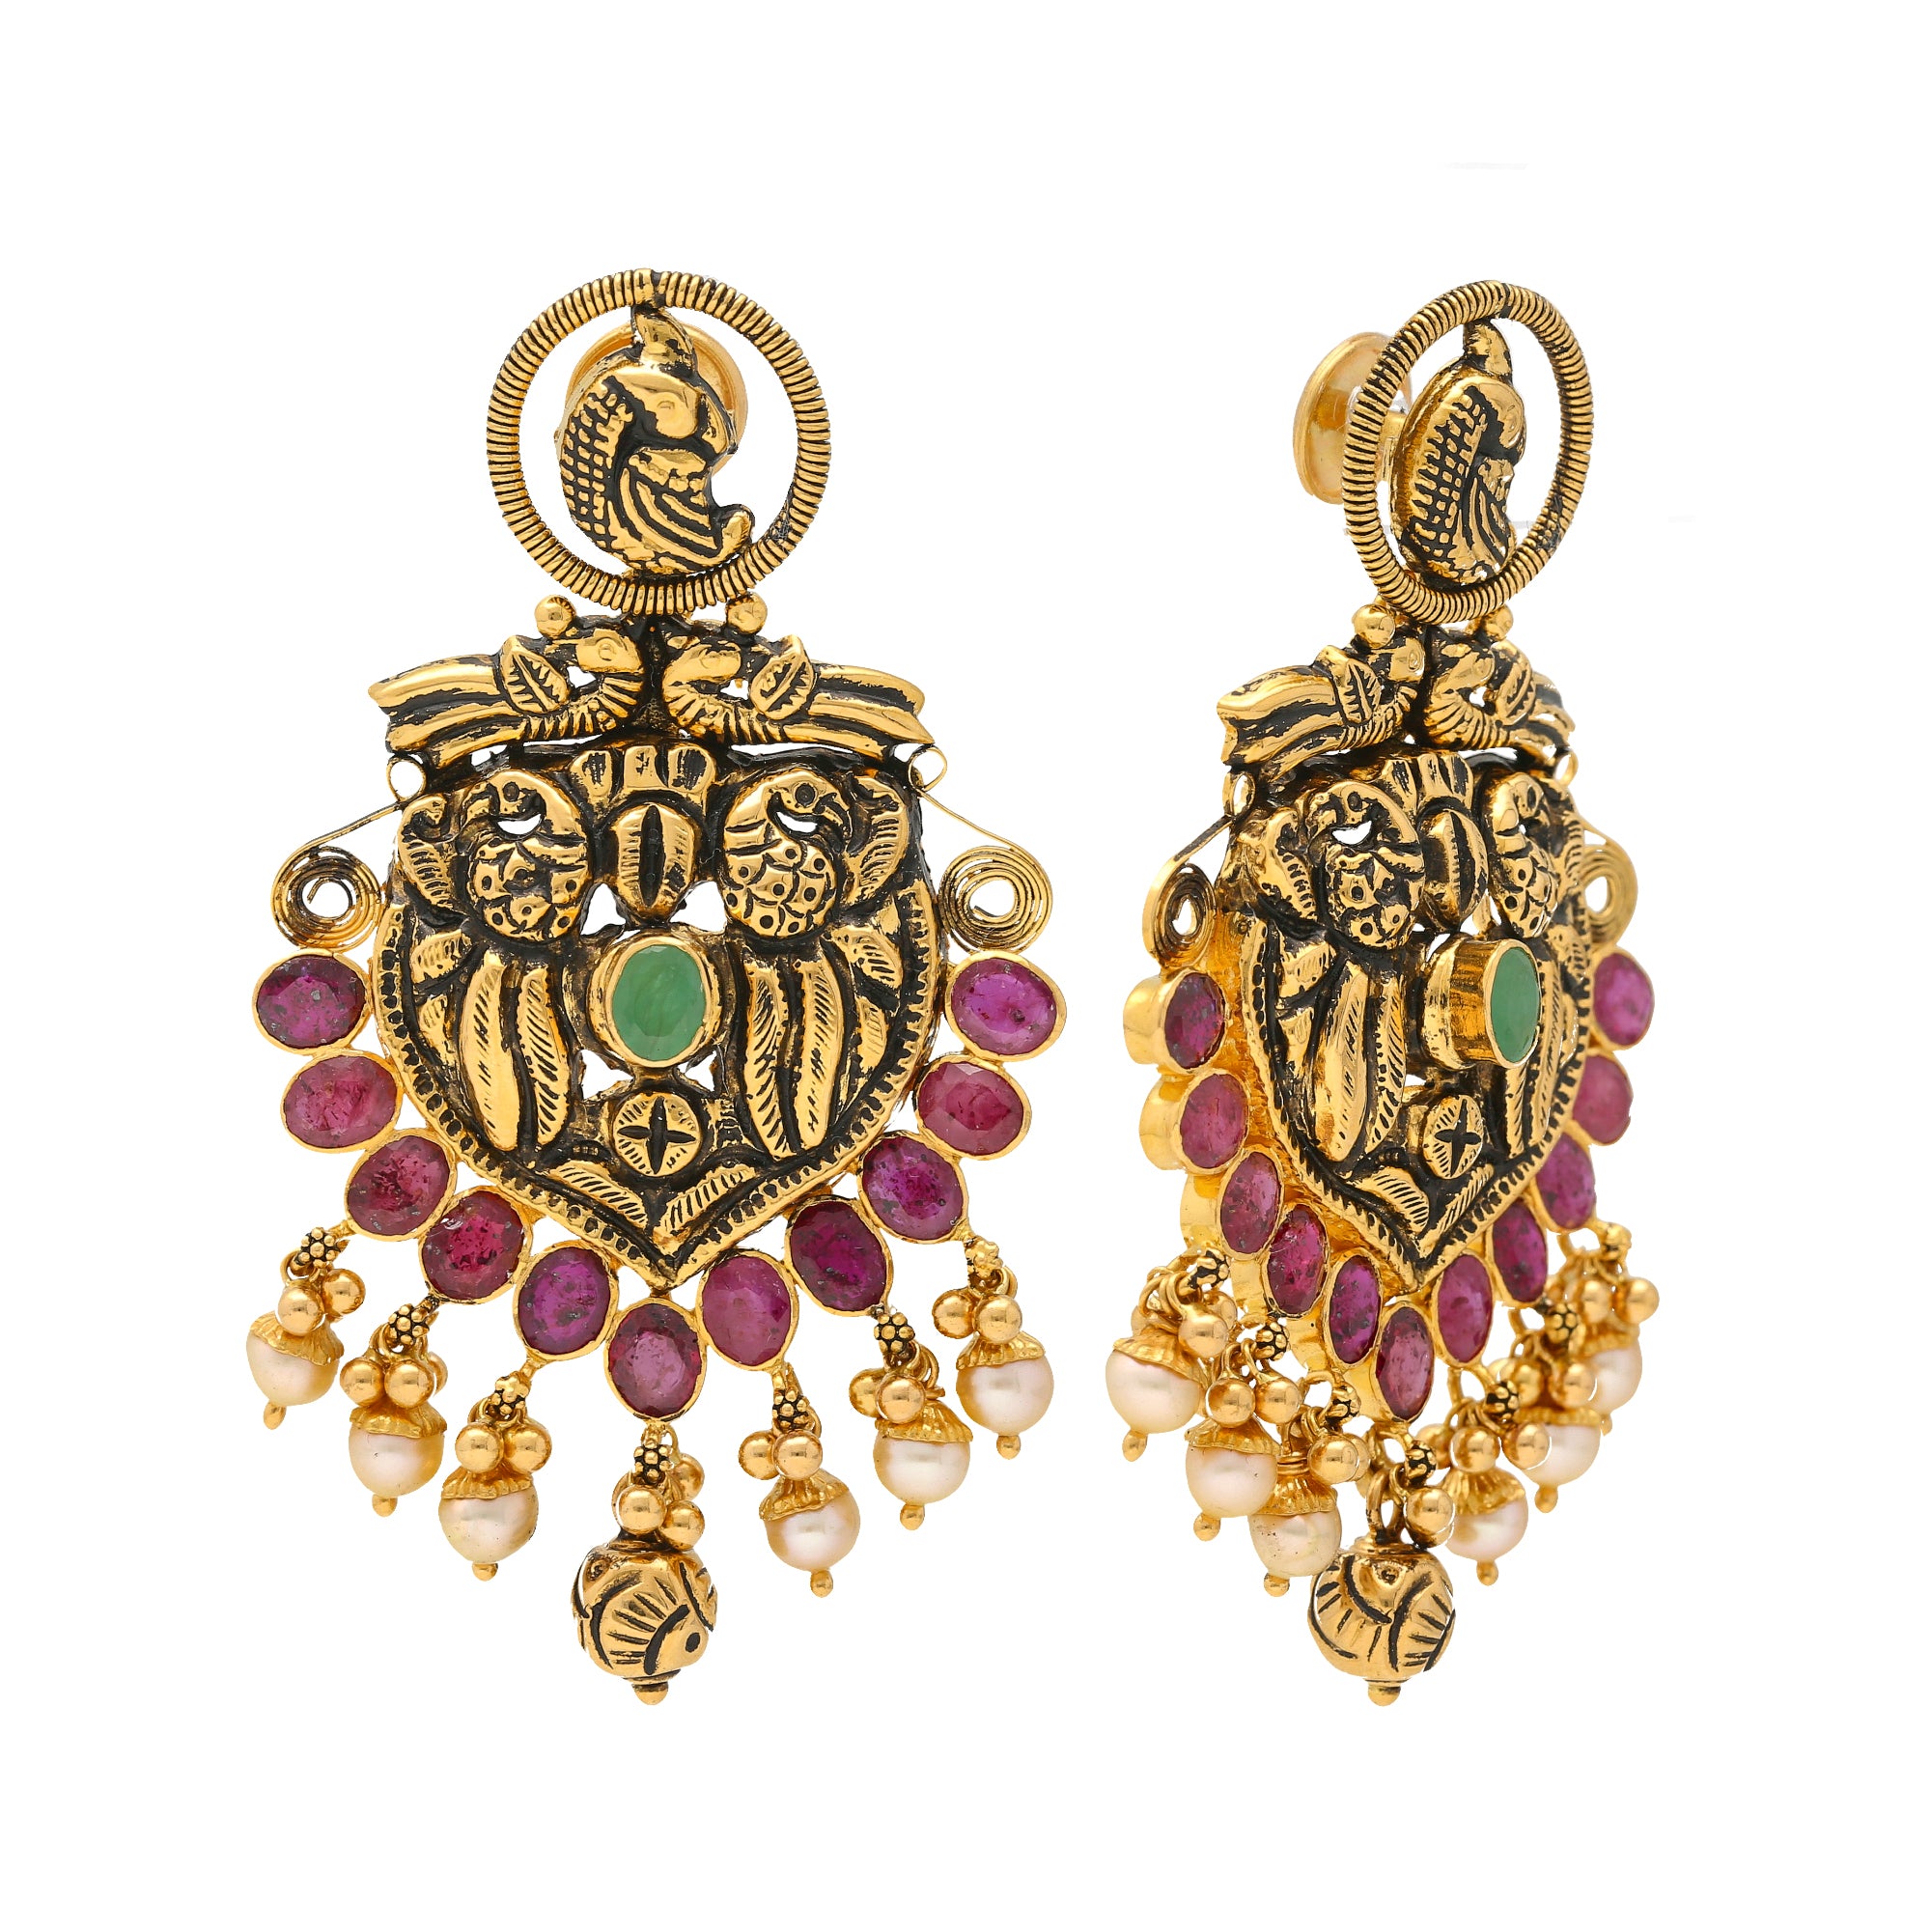 Antique Gold And Pearl Earrings – V O G U E + B E A U T Y